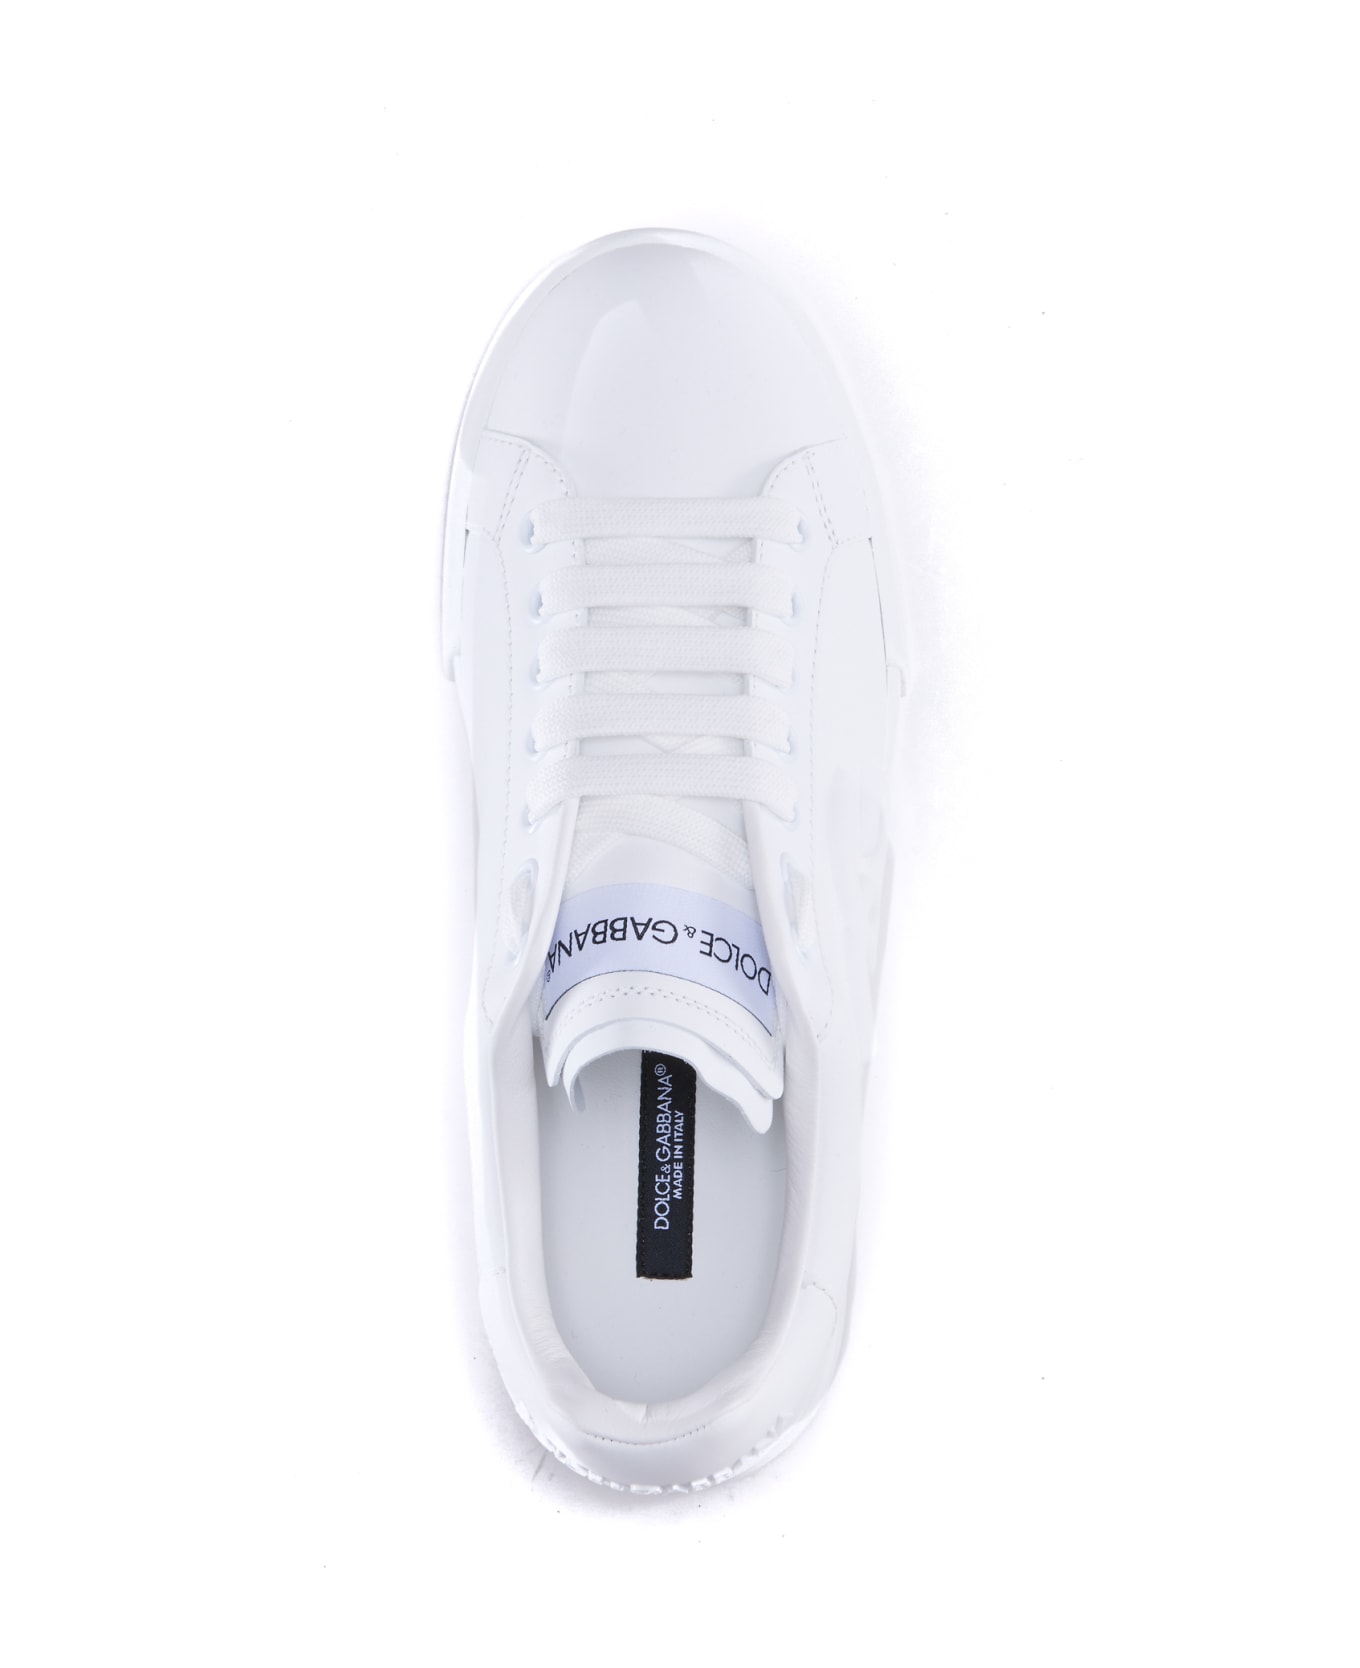 Dolce & Gabbana Portofino Sneakers - Bianco